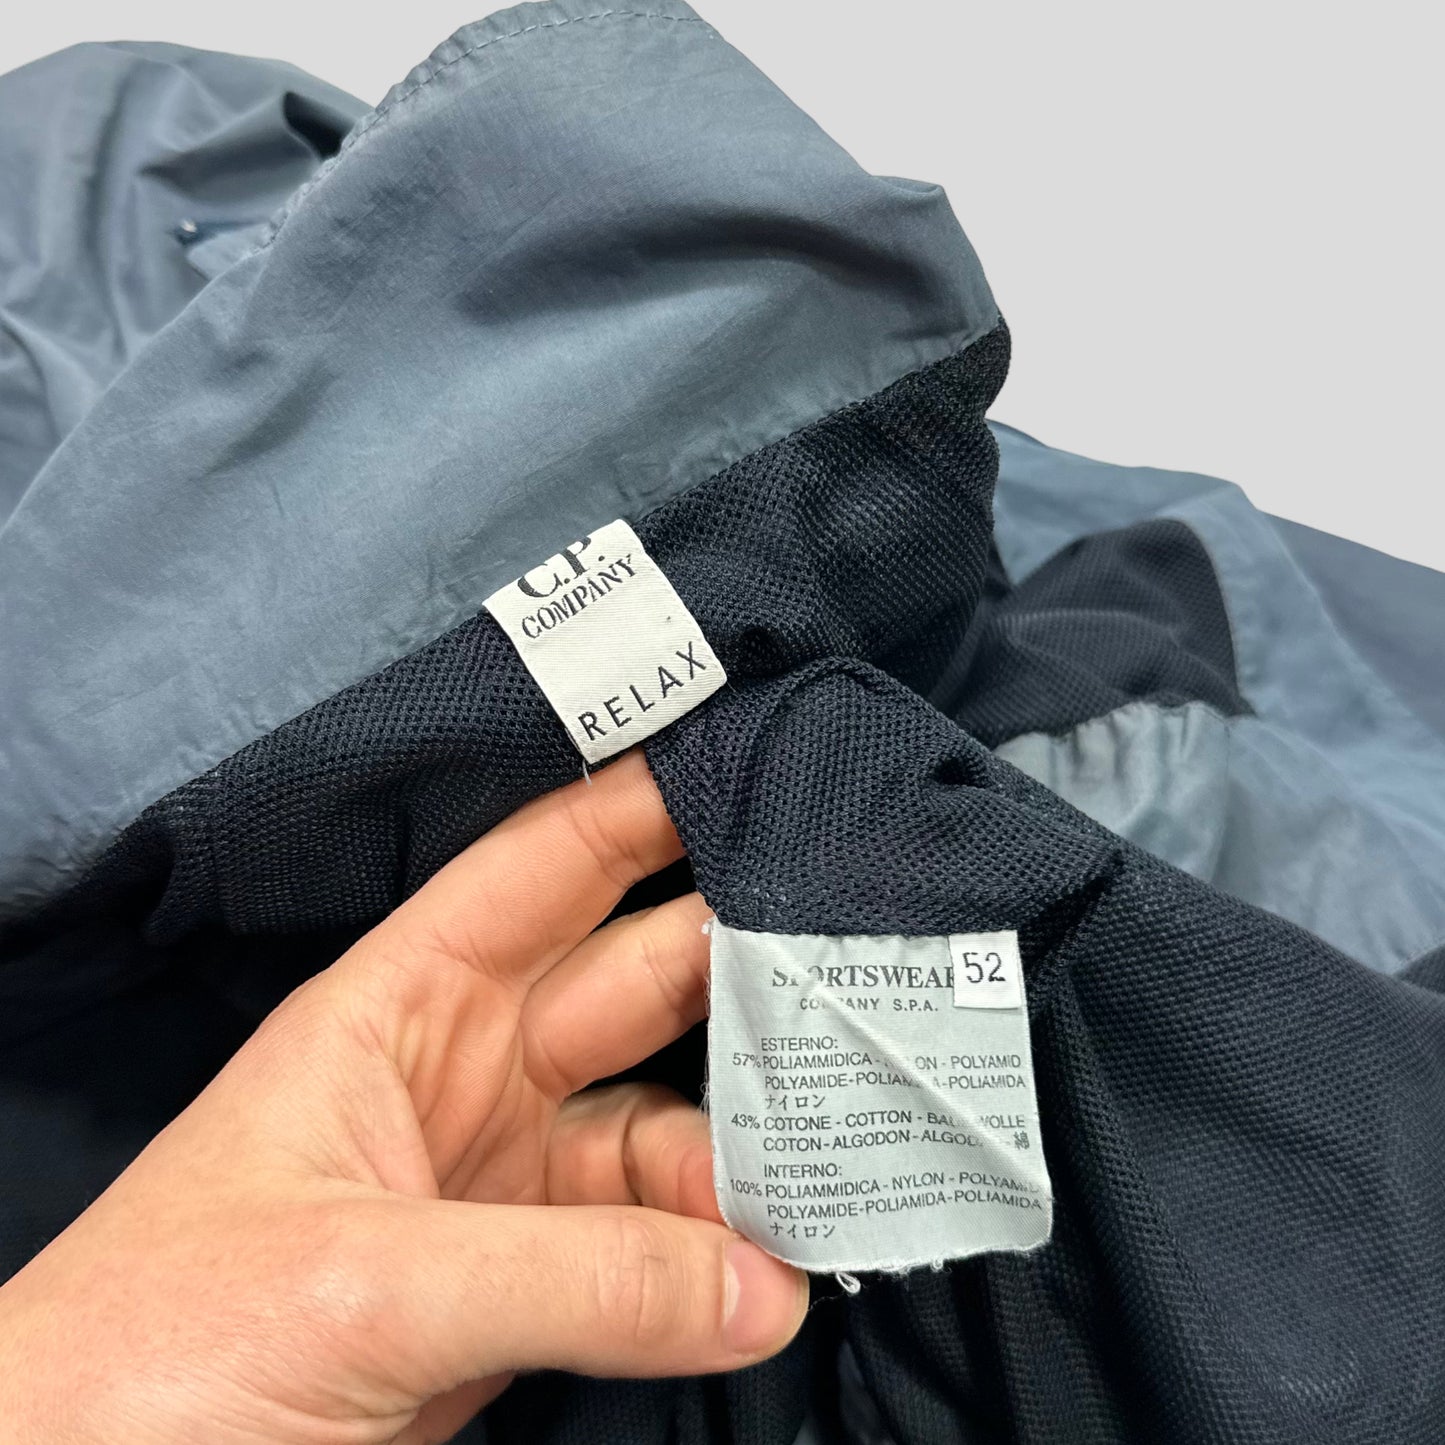 CP Company SS01 Relax Convertible Nylon Bag Jacket - XL